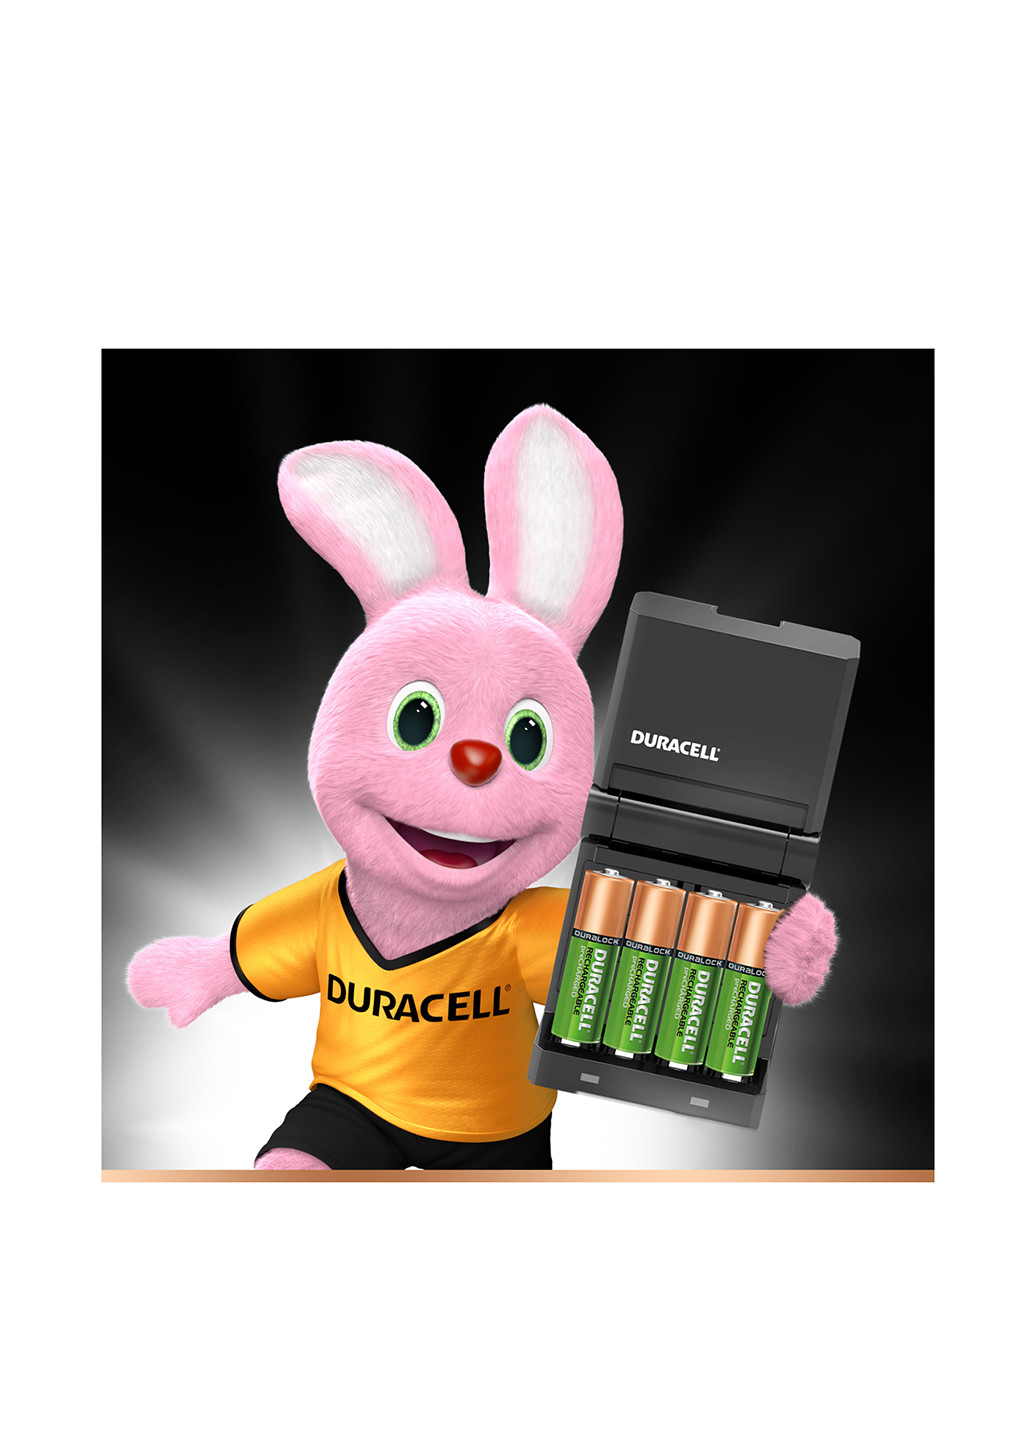 Зарядное устройство для аккумуляторов CEF27 AA 25002 AAA 850 (1 шт.) Duracell (43215163)